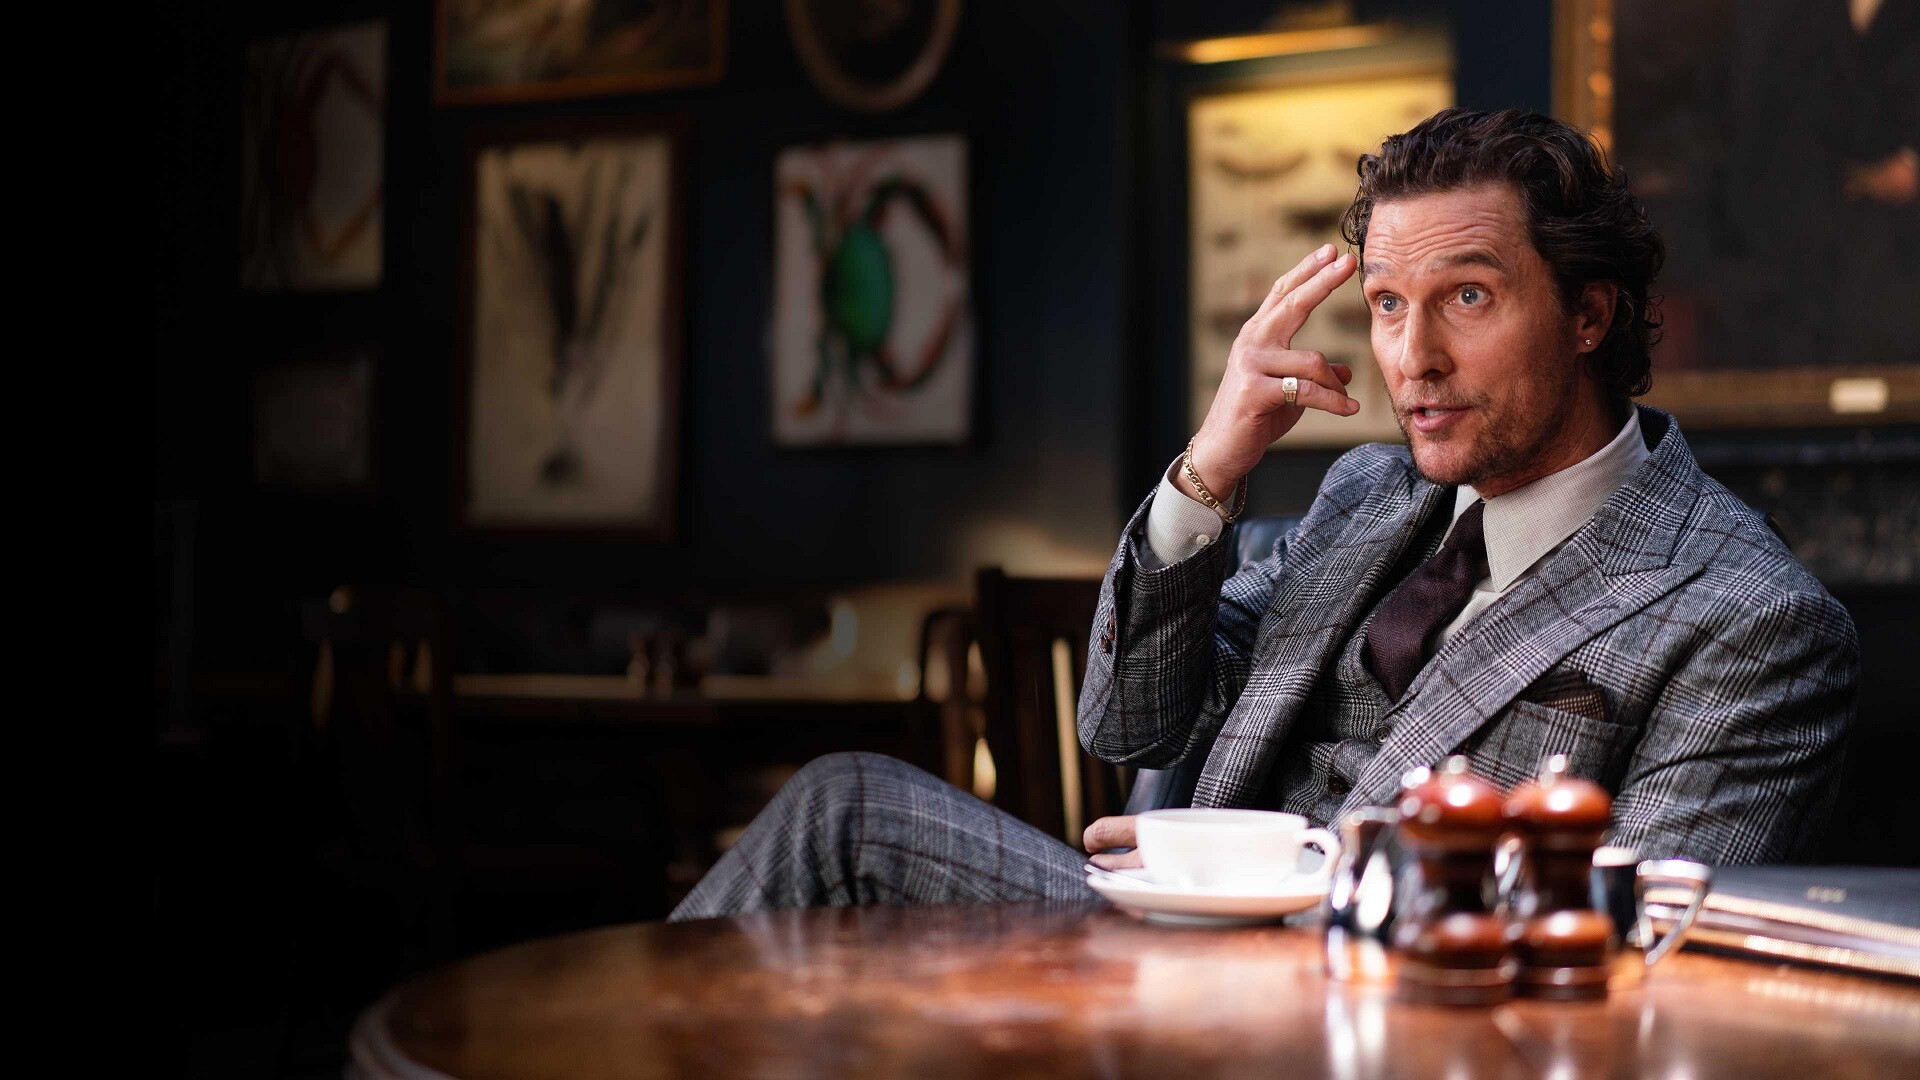 The Gentlemen: Matthew McConaughey as Michael "Mickey" Pearson, an American cannabis wholesaler. 1920x1080 Full HD Background.